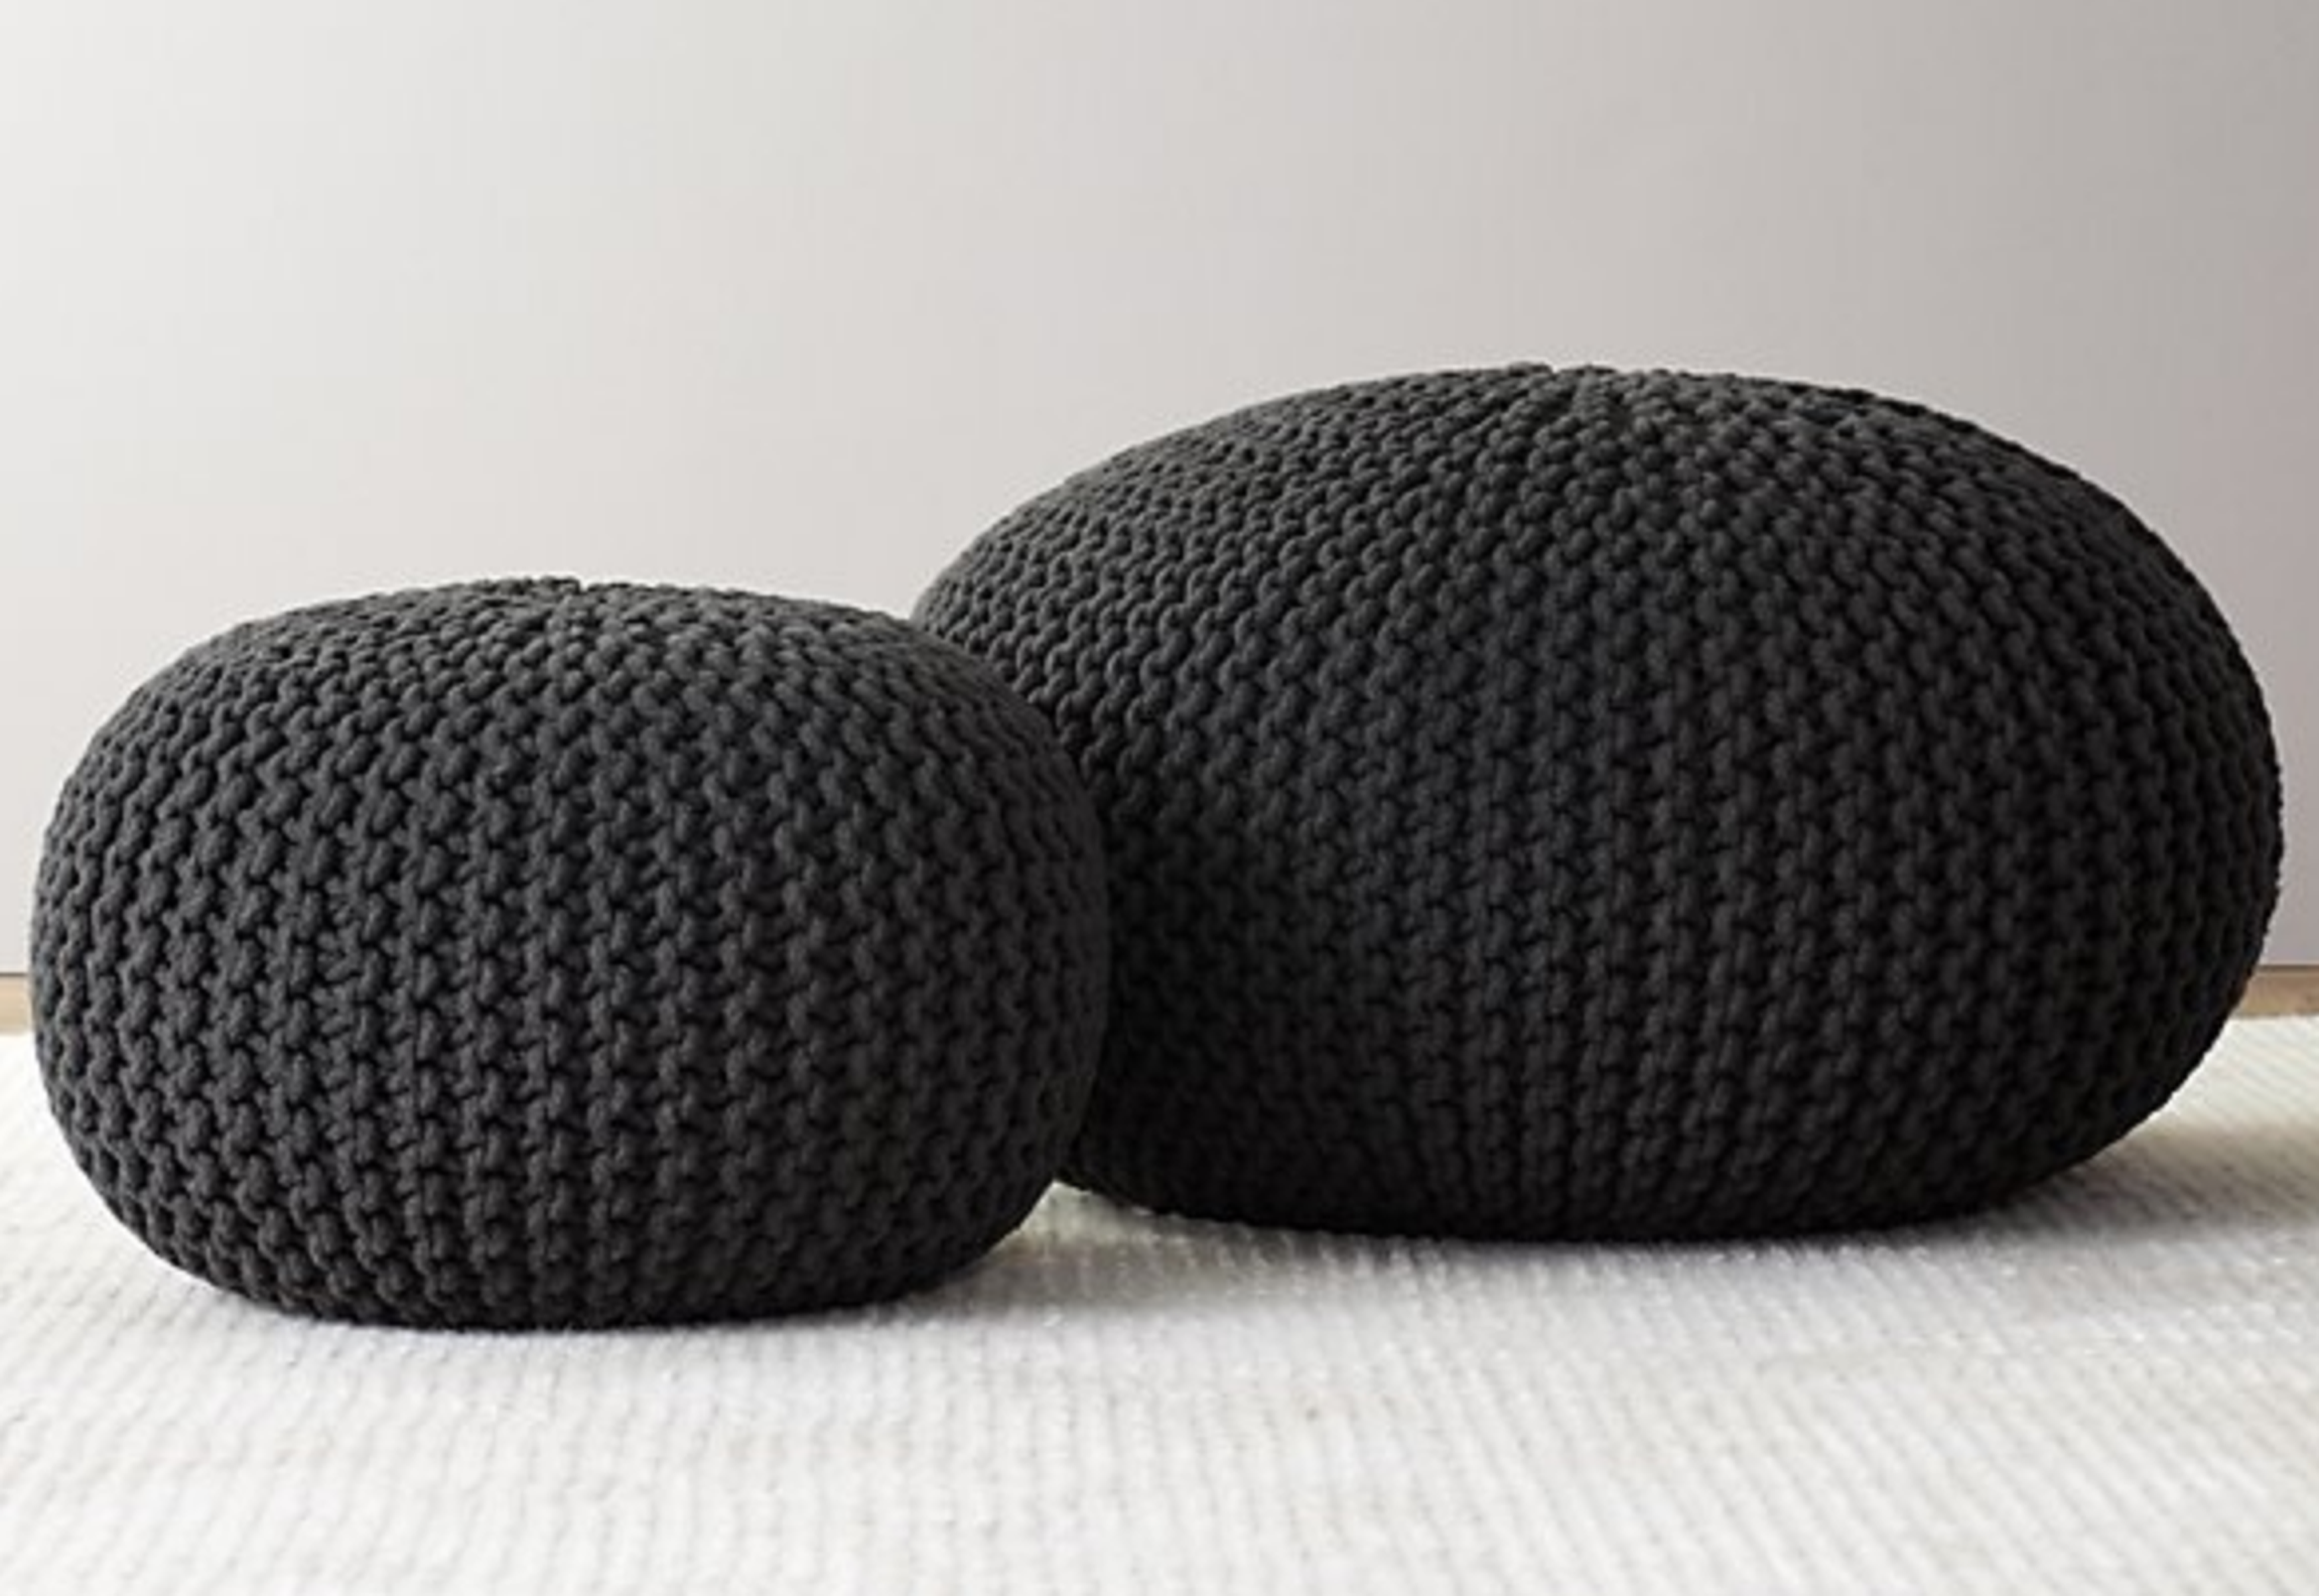 Knit Cotton Round Pouf - Charcoal - RH Baby & Child